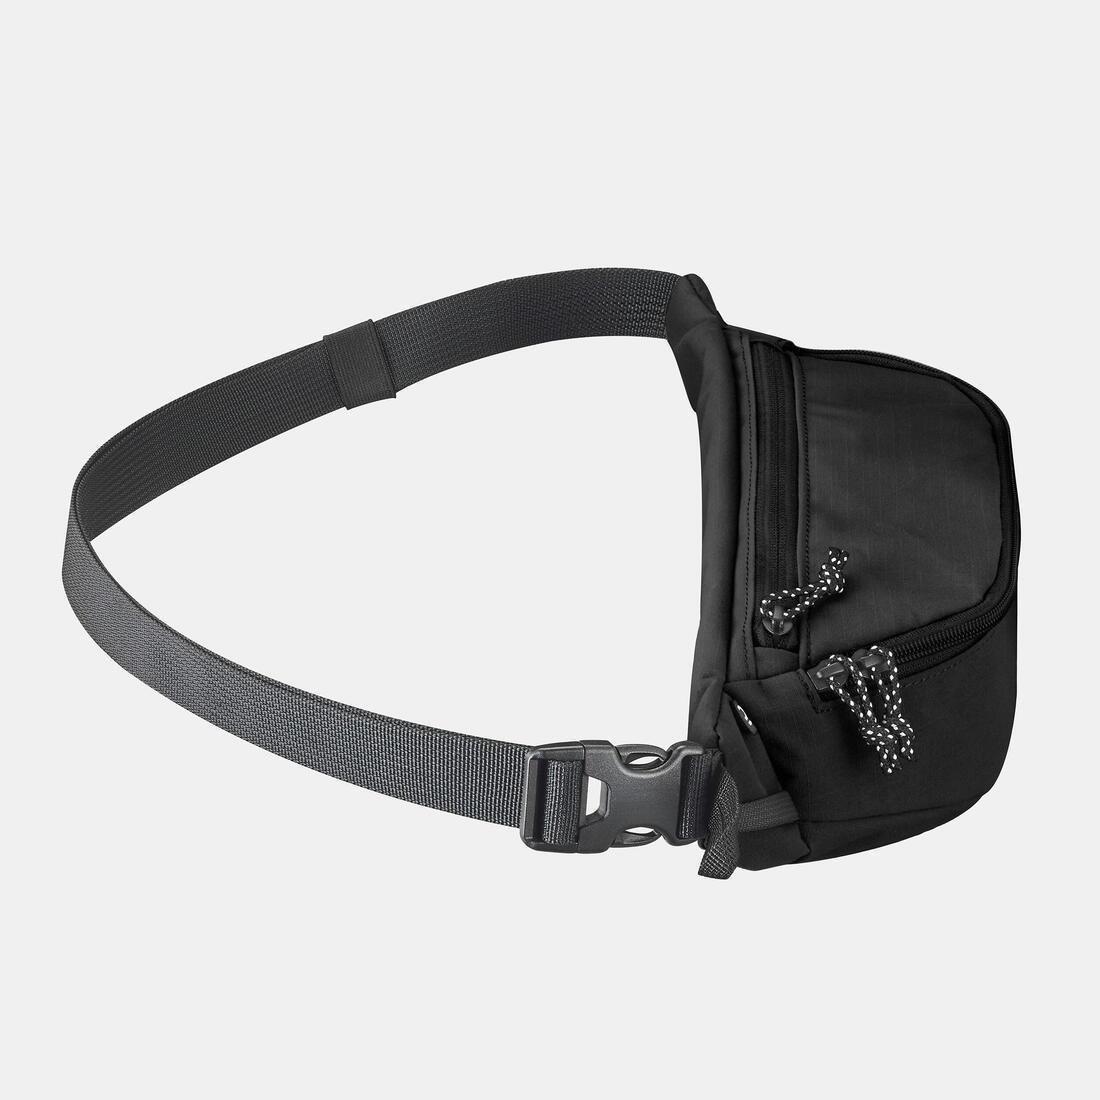 FORCLAZ - 2L Travel Belt Bag, Grey